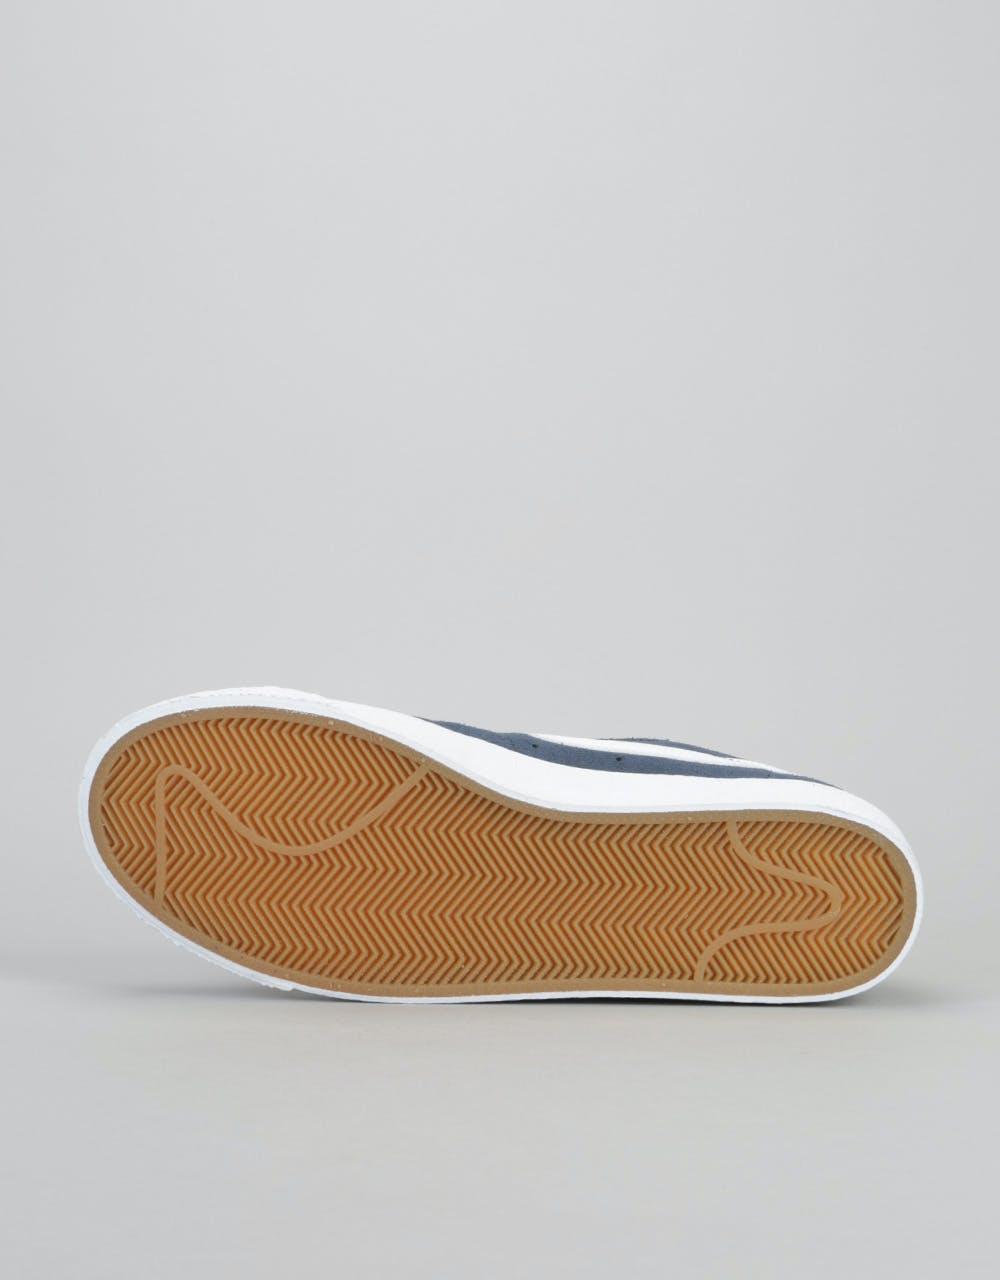 Nike SB Blazer Low Skate Shoes - Obsidian/White-Gum Light Brown-White